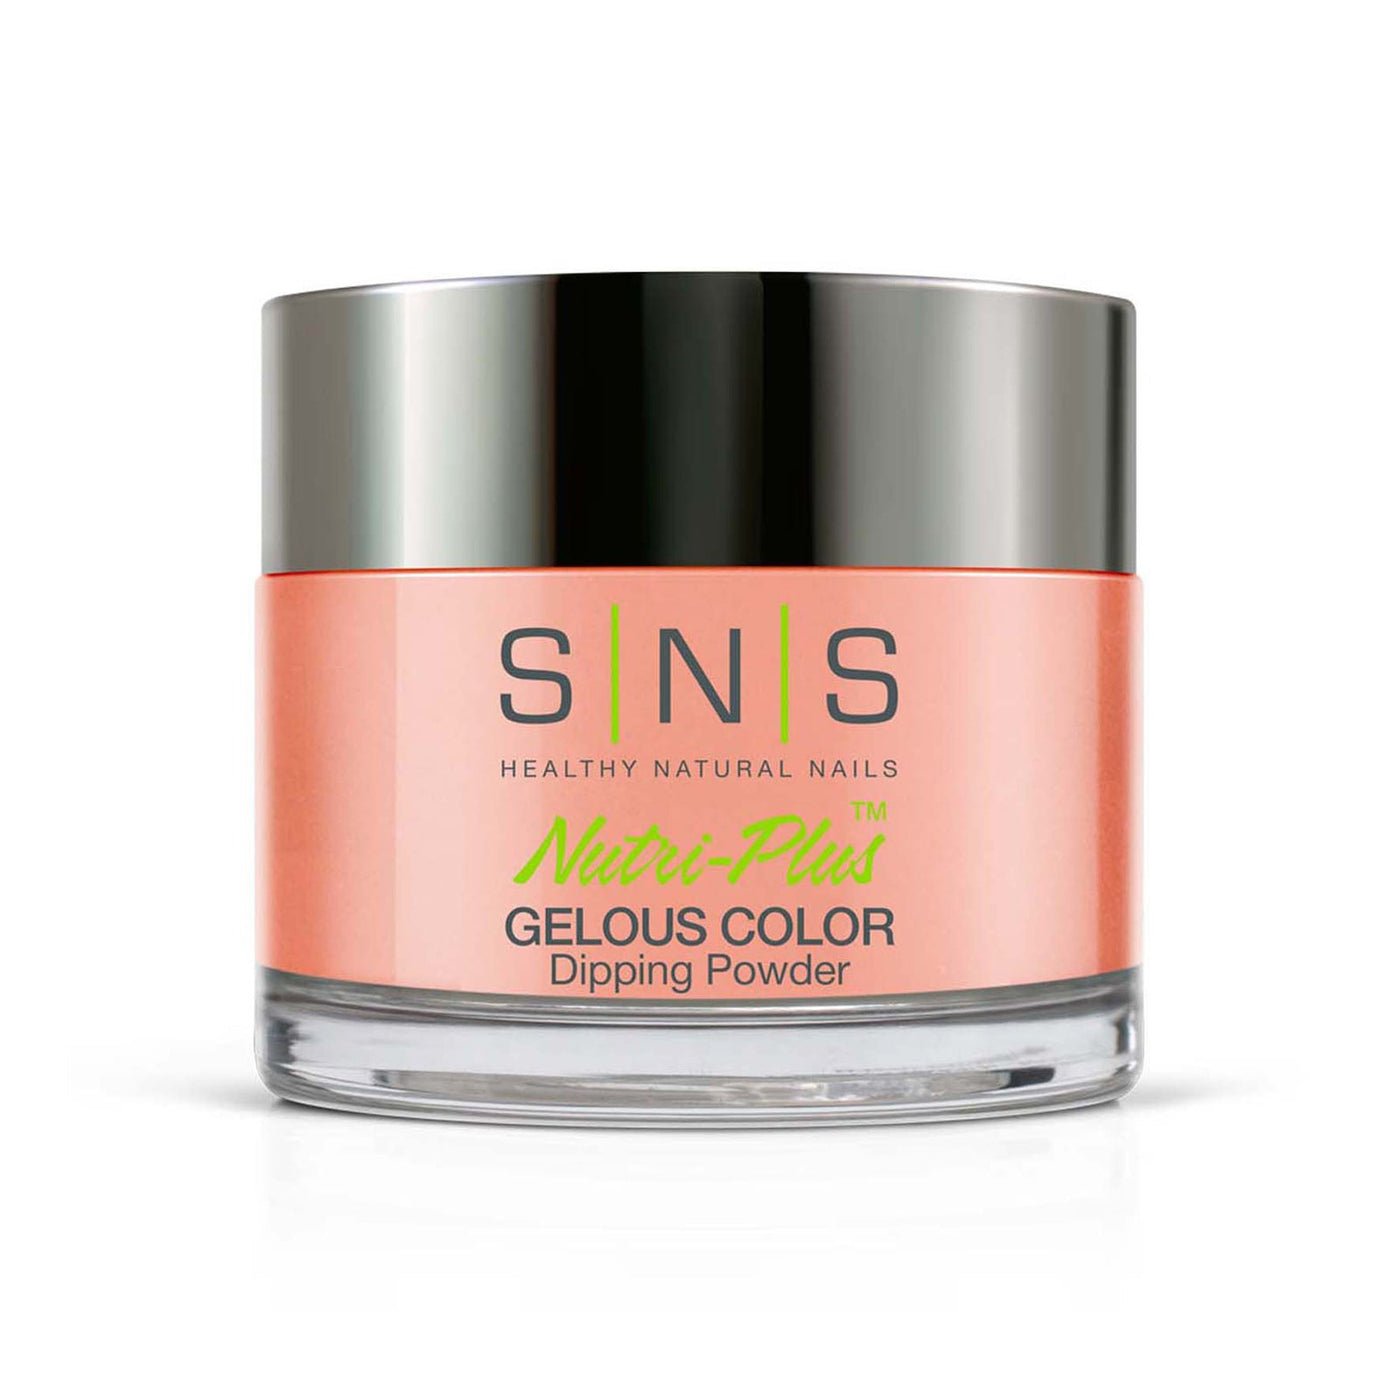 SNS Gelous Color Dipping Powder BD02 Spandex Ballet (43g) packaging